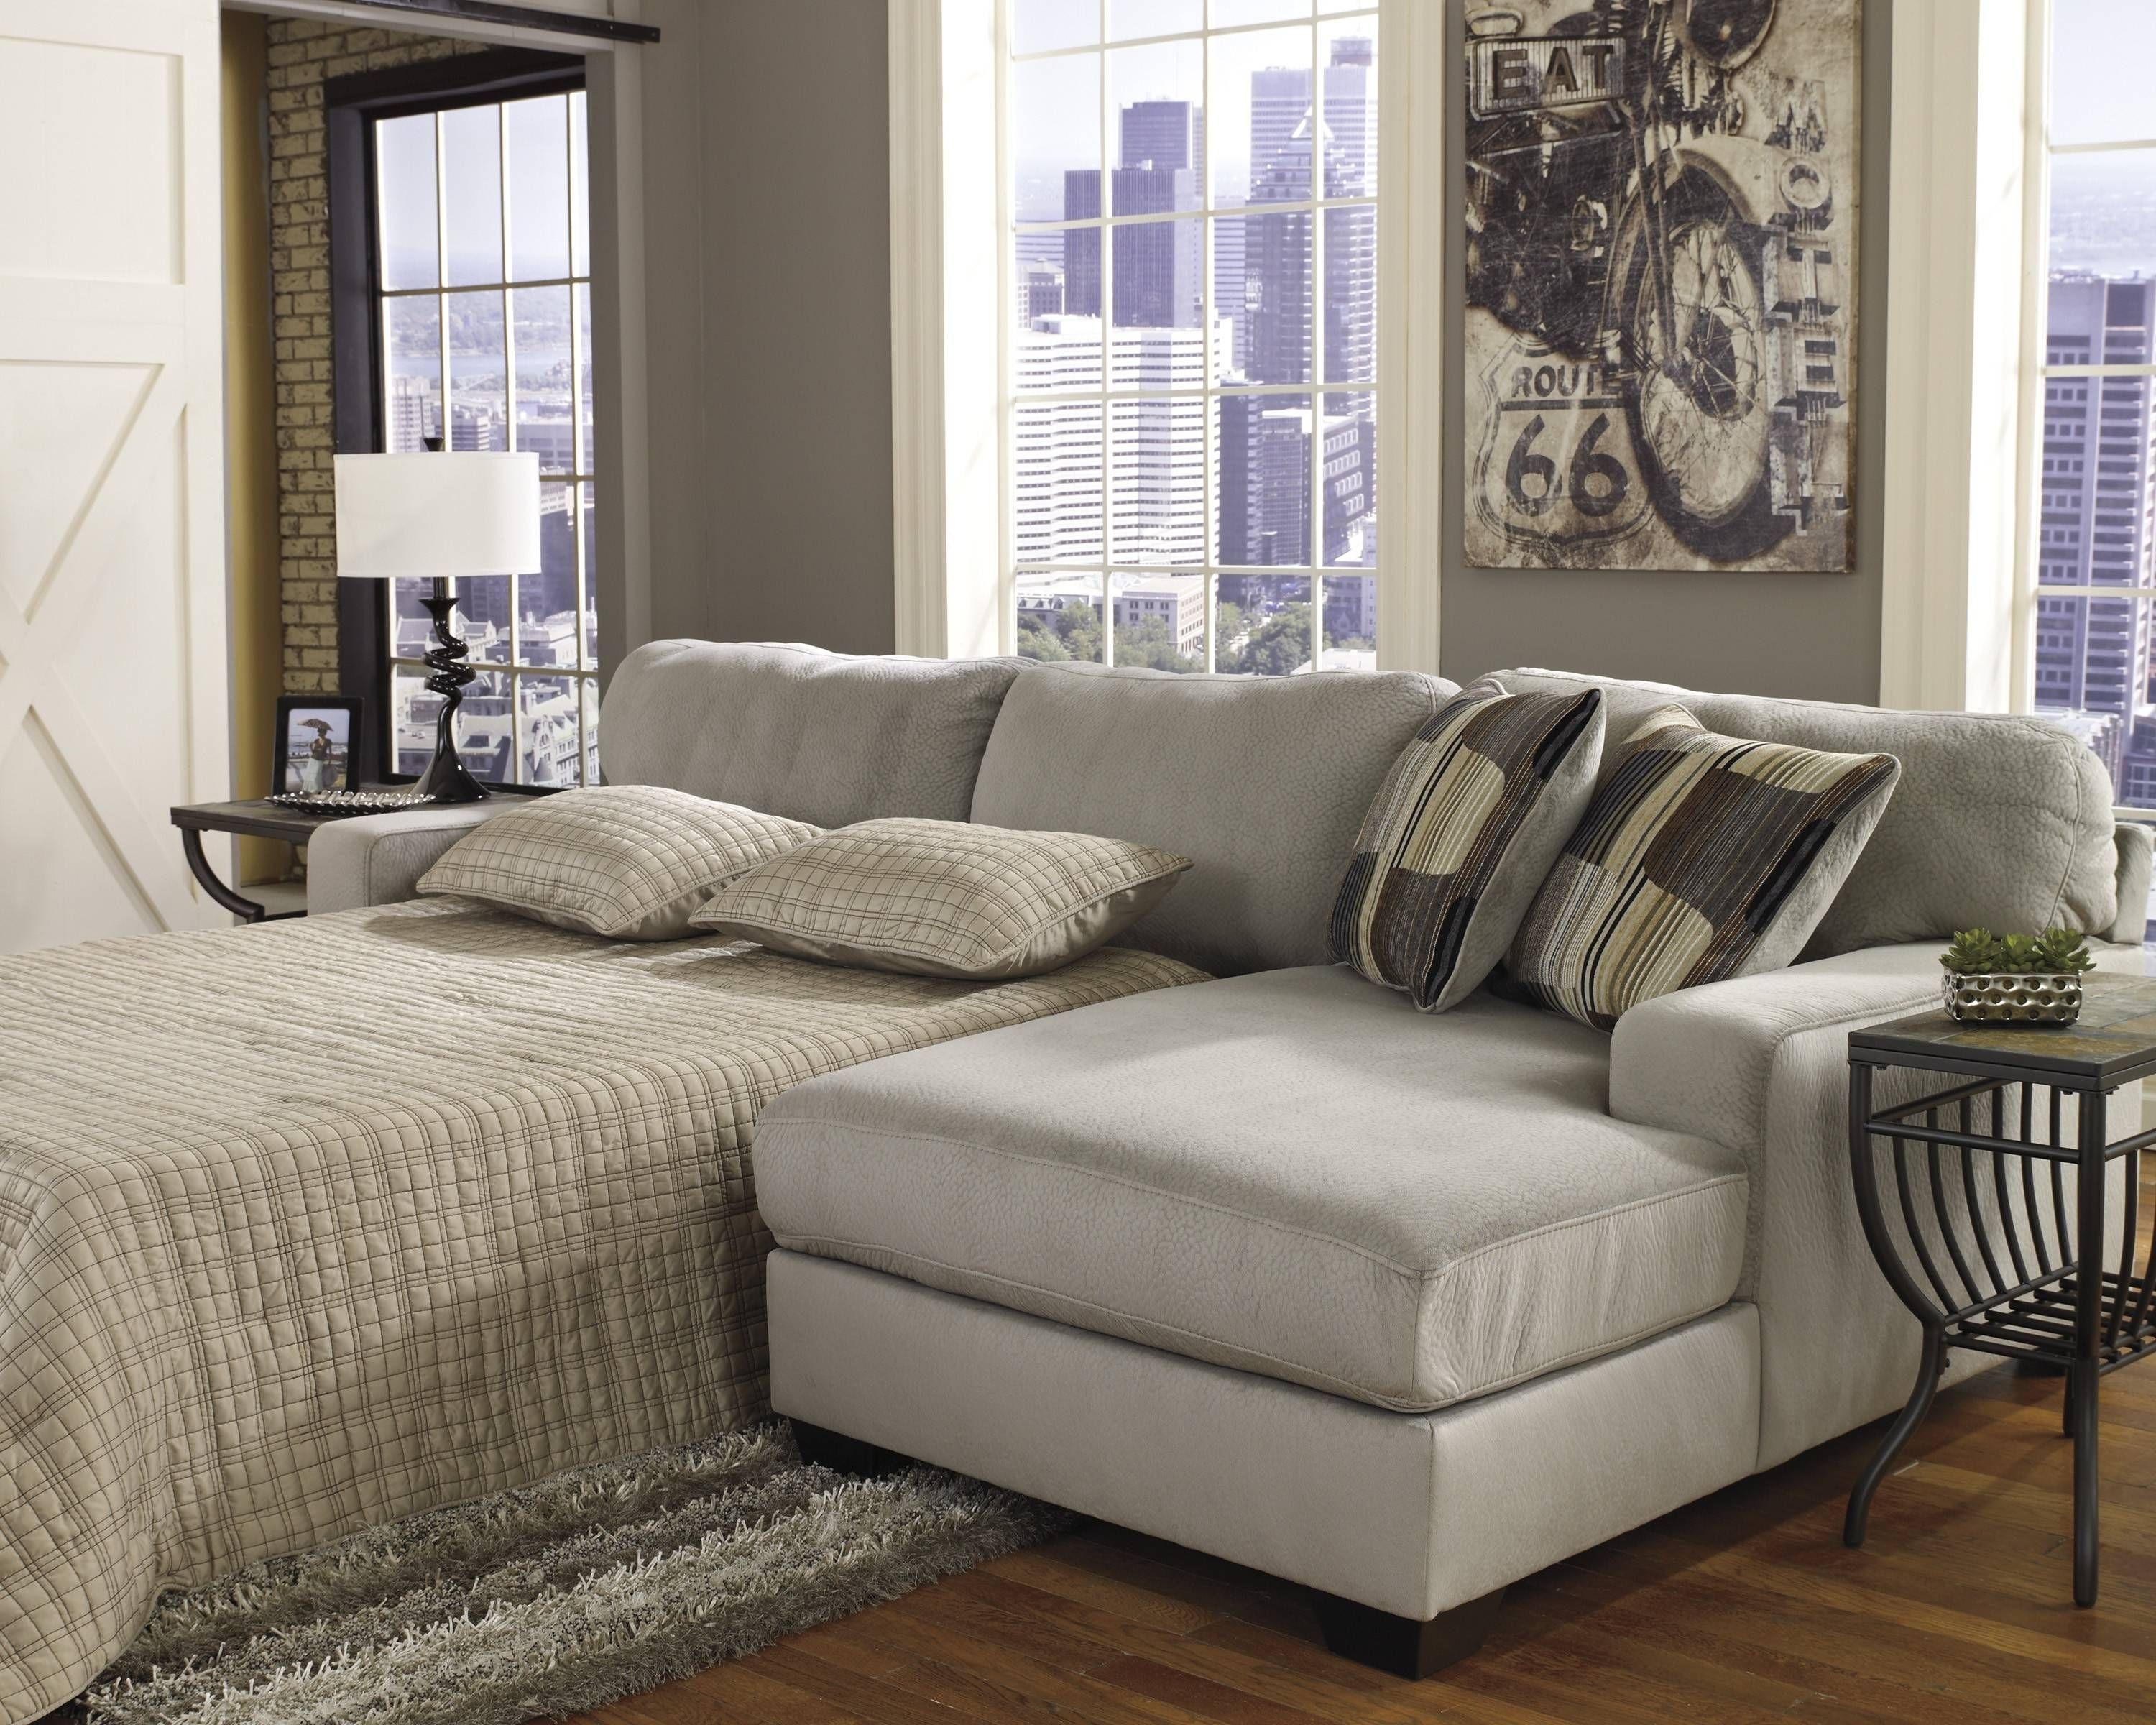 Sofas Center : Best Most Comfortablea Ideas On Pinterest Sleeper Inside Cool Sleeper Sofas (View 4 of 30)